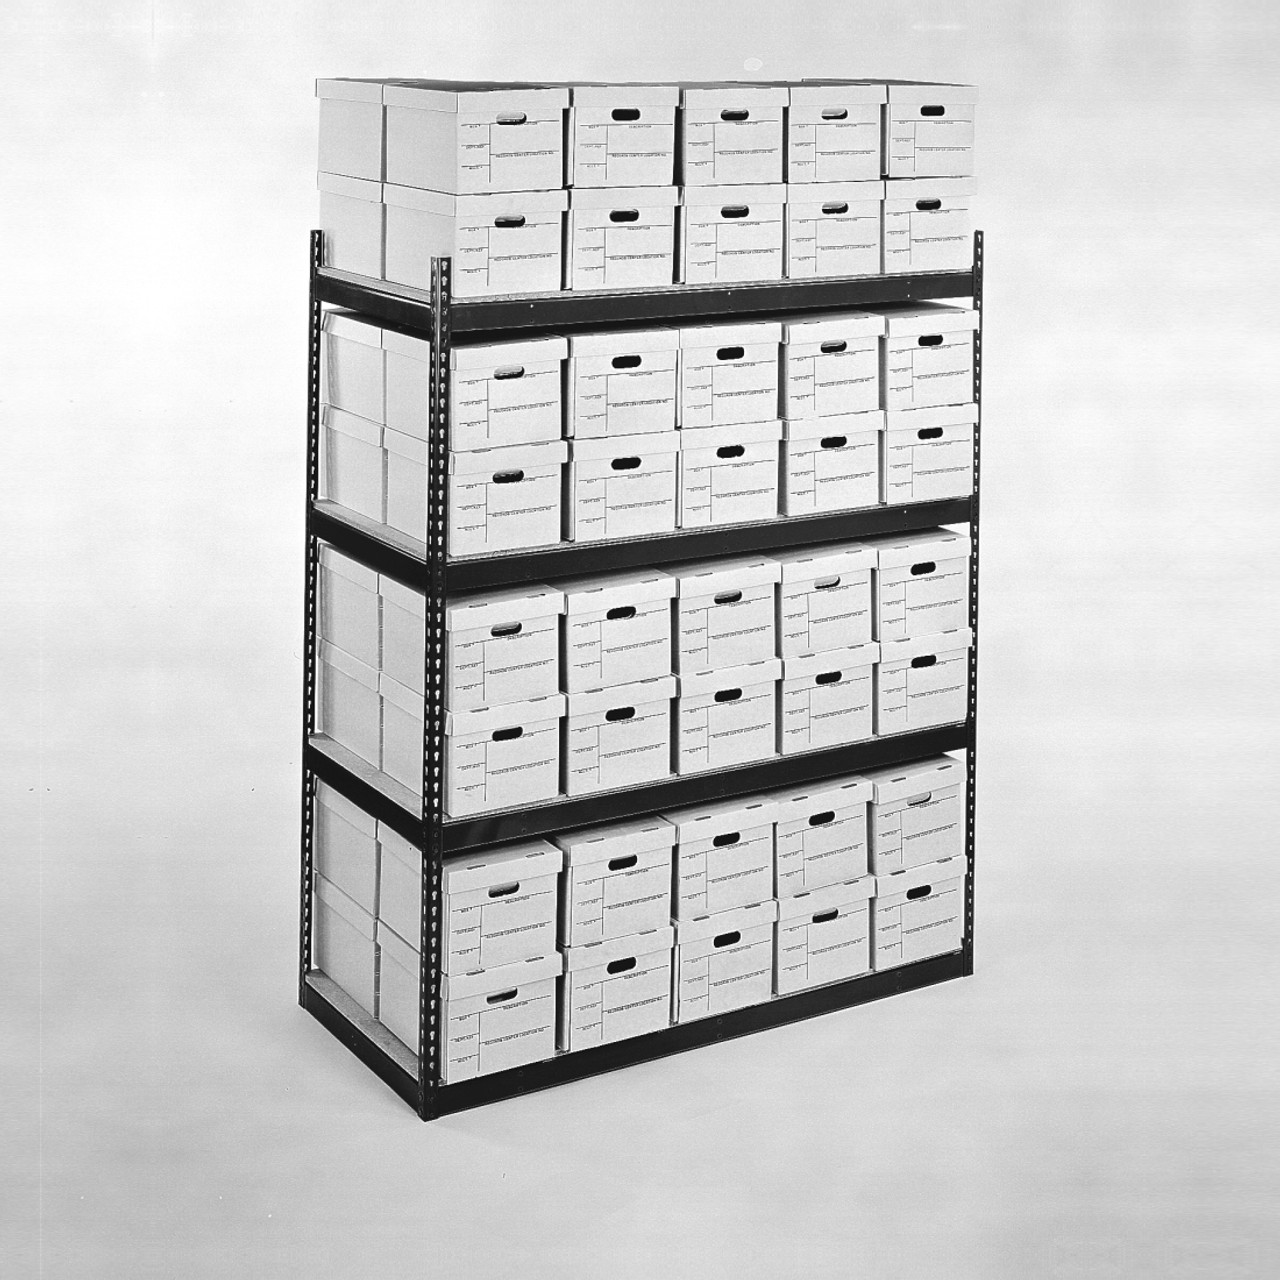 Standard Record Storage Cartons - Detached Lids - Hollinger Metal Edge